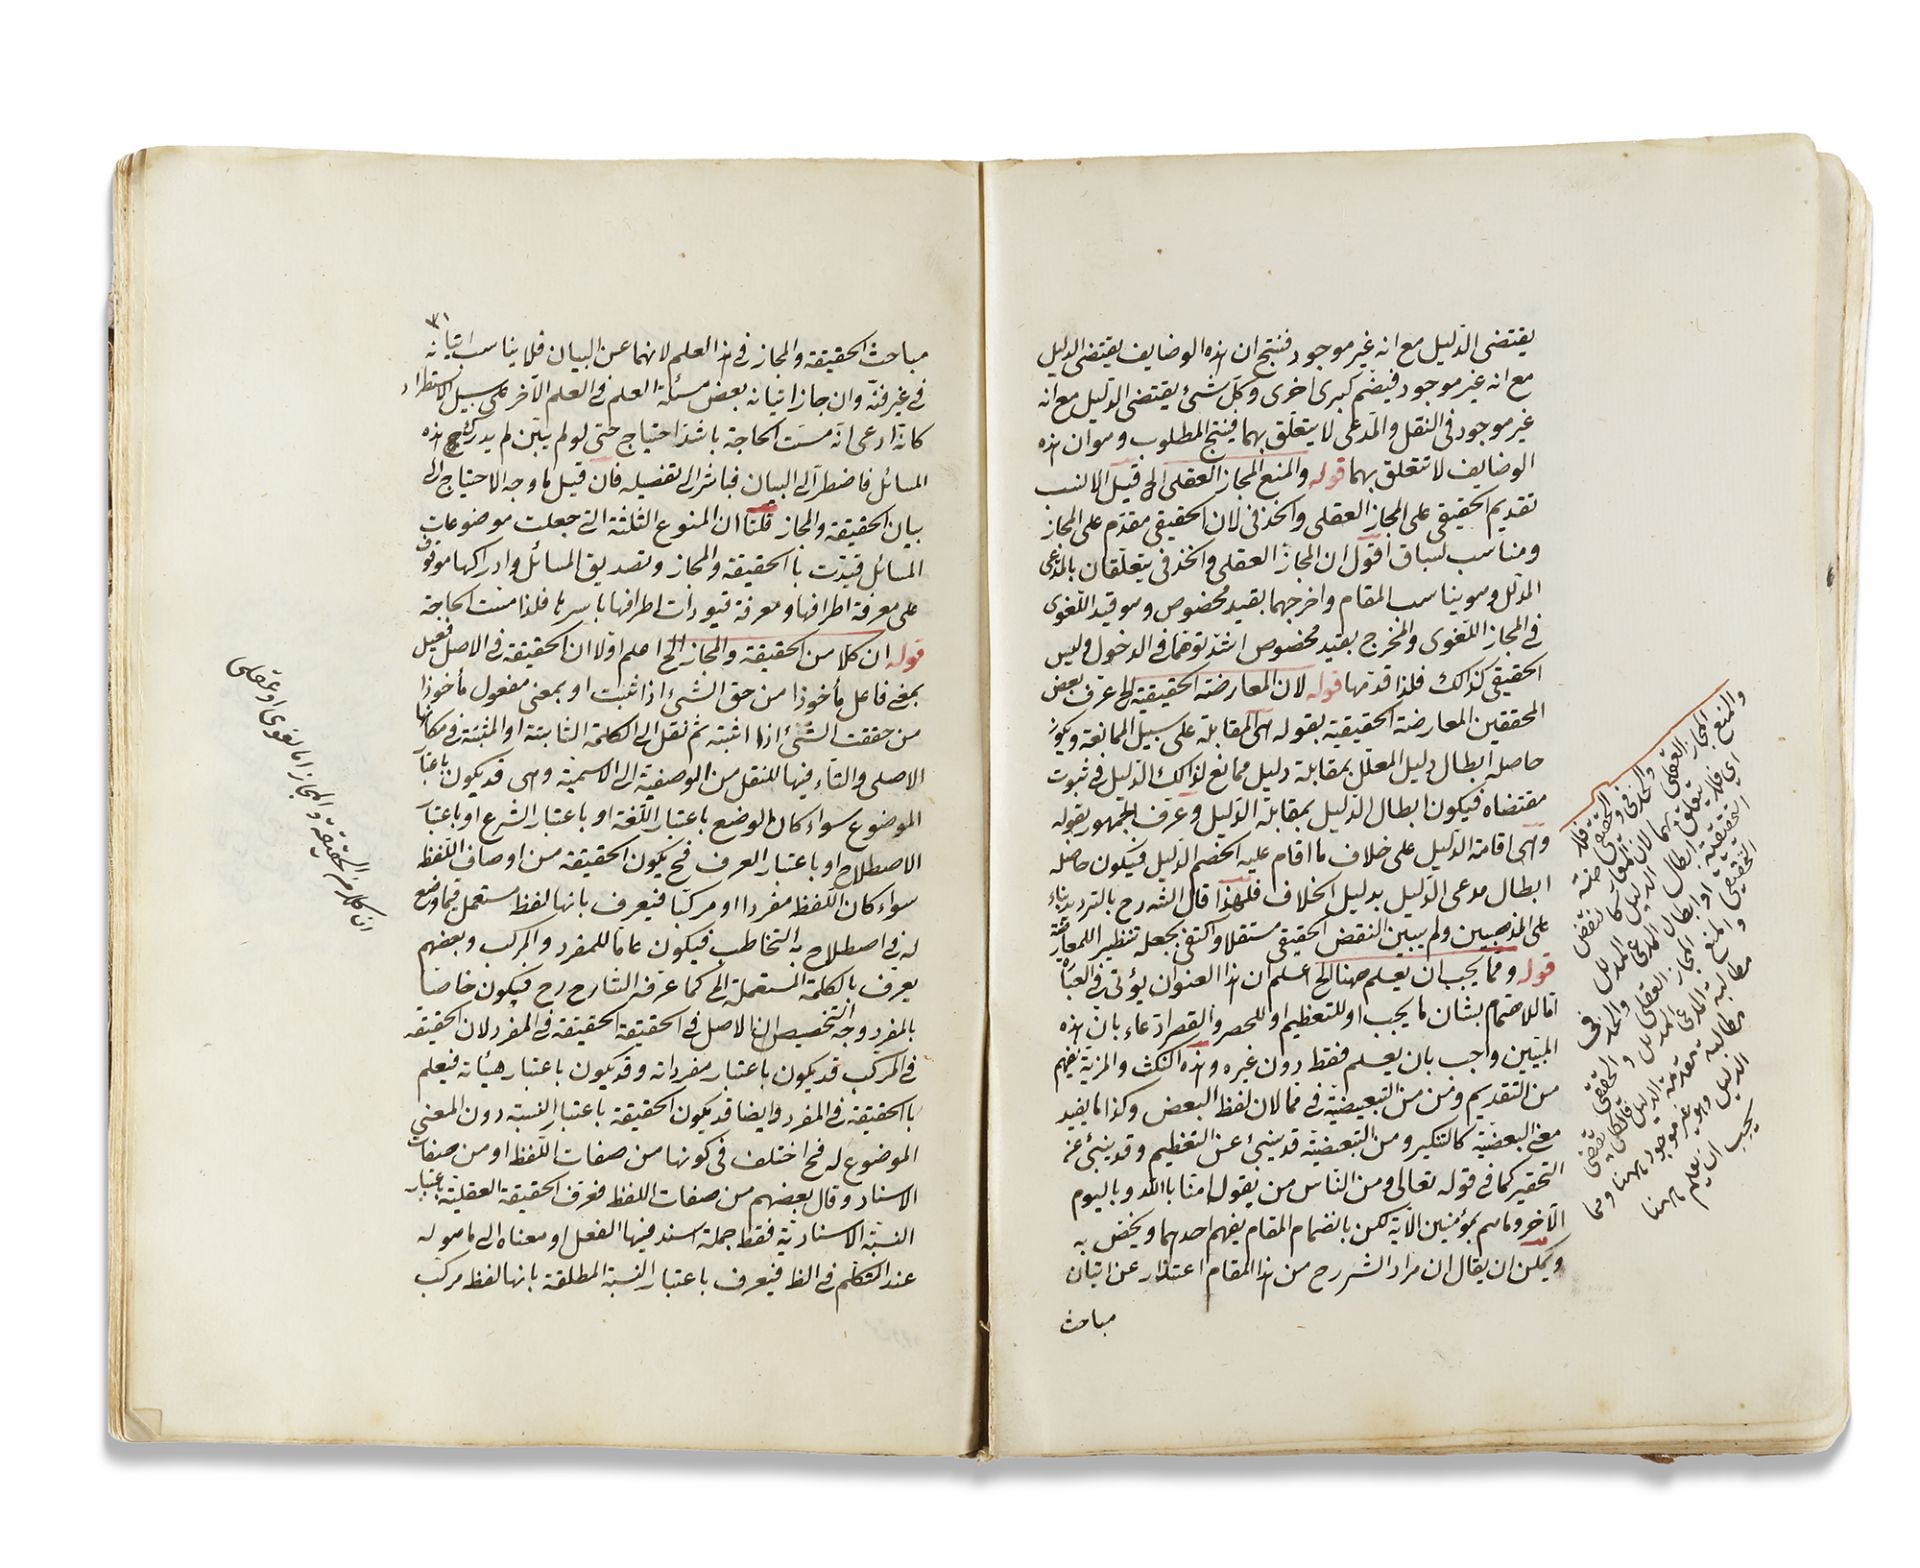 SHARH ALA AL-RISALAH AL-HUSAYNIYAH, COPIED IN JUMADA II 1215 AH/ OCTOBER 1800 AD - Image 2 of 6